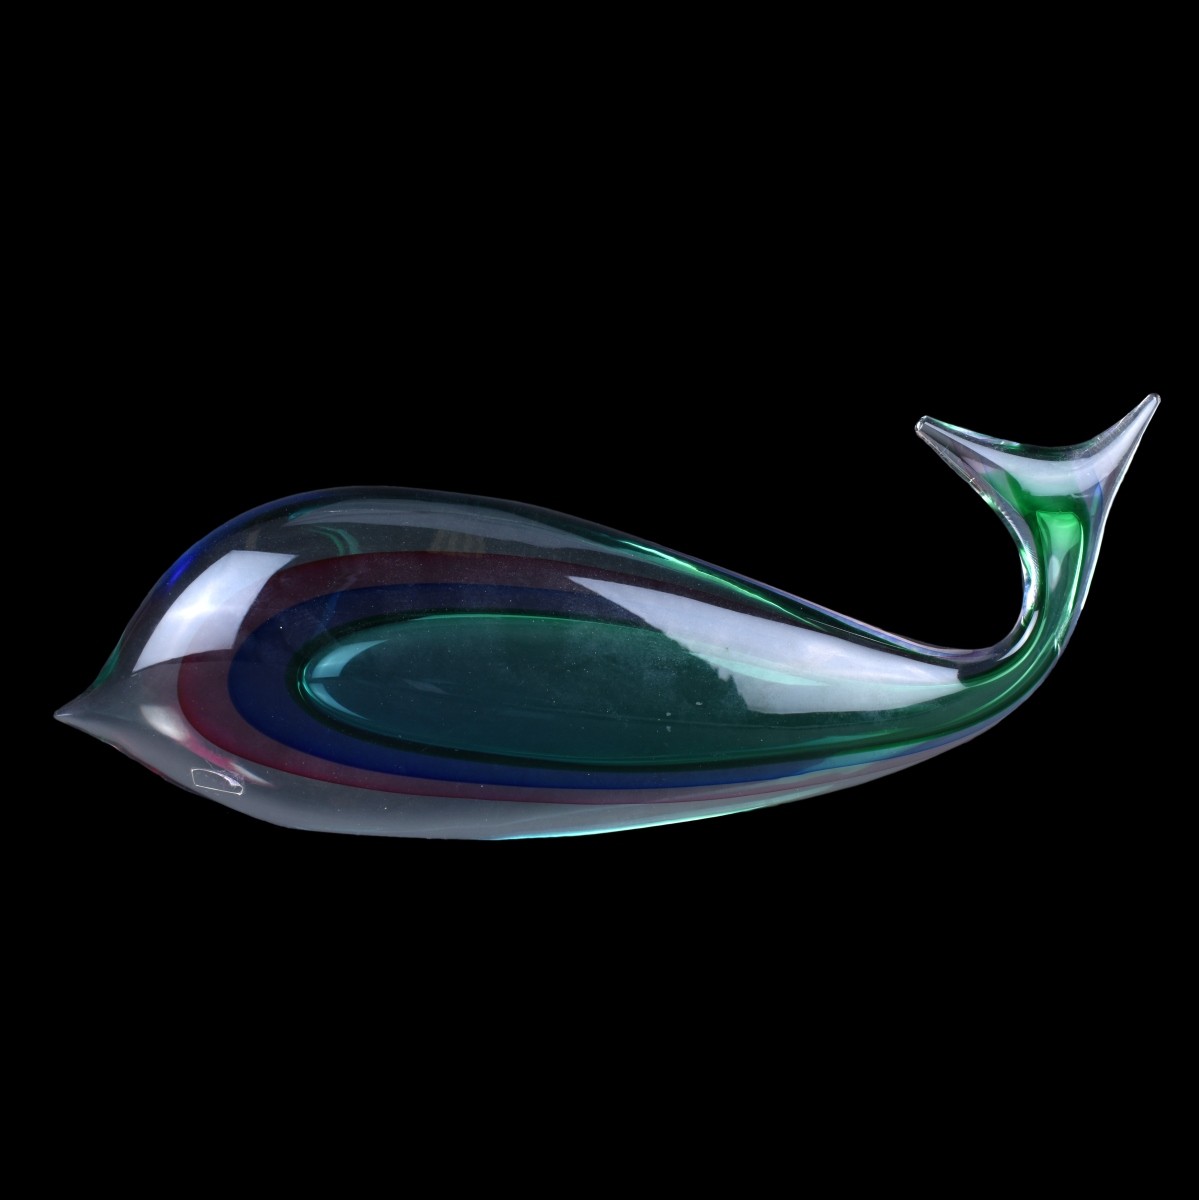 Luigi Onesto Sommerso Art Glass Fish Sculpture